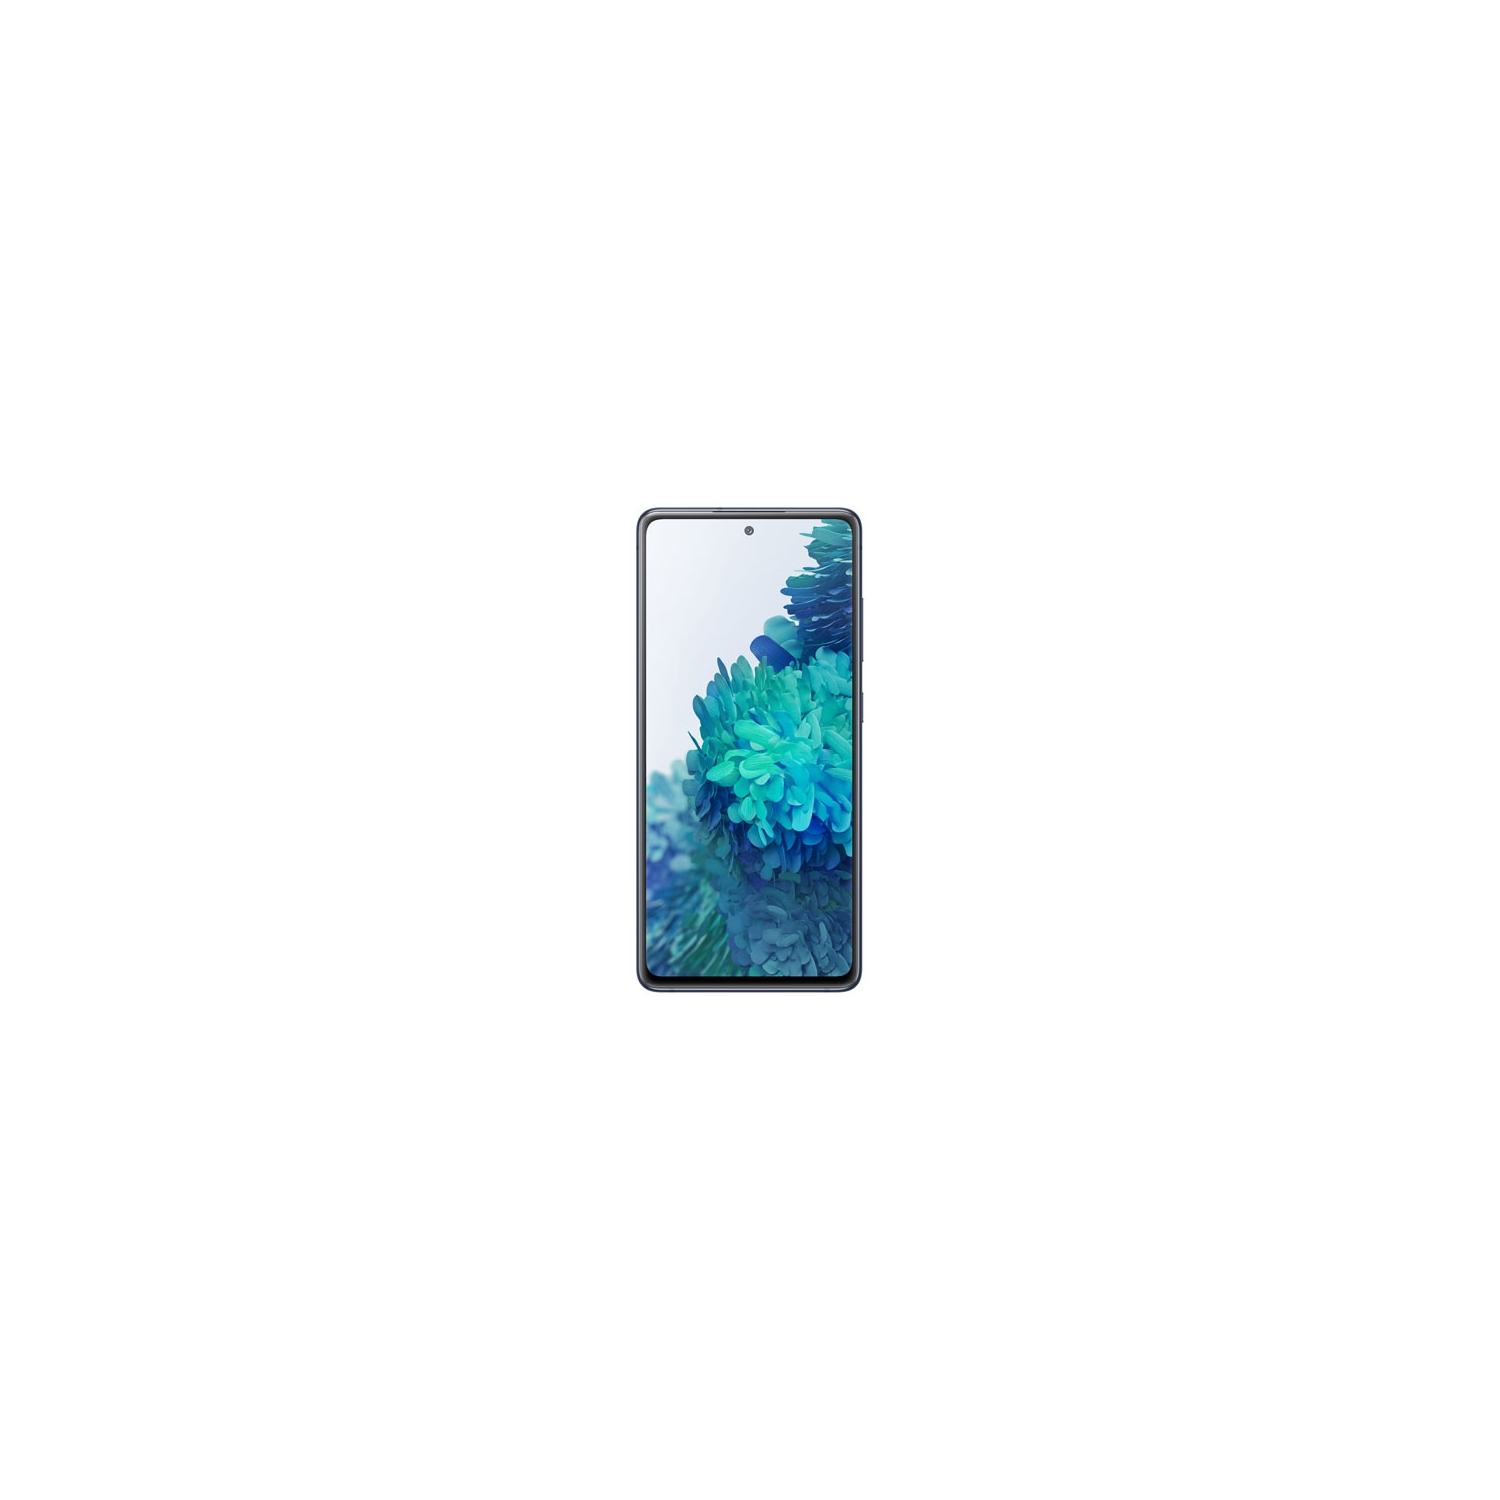 Refurbished (Good) - Samsung Galaxy S20 FE 5G 128GB Smartphone - Cloud Navy - Unlocked